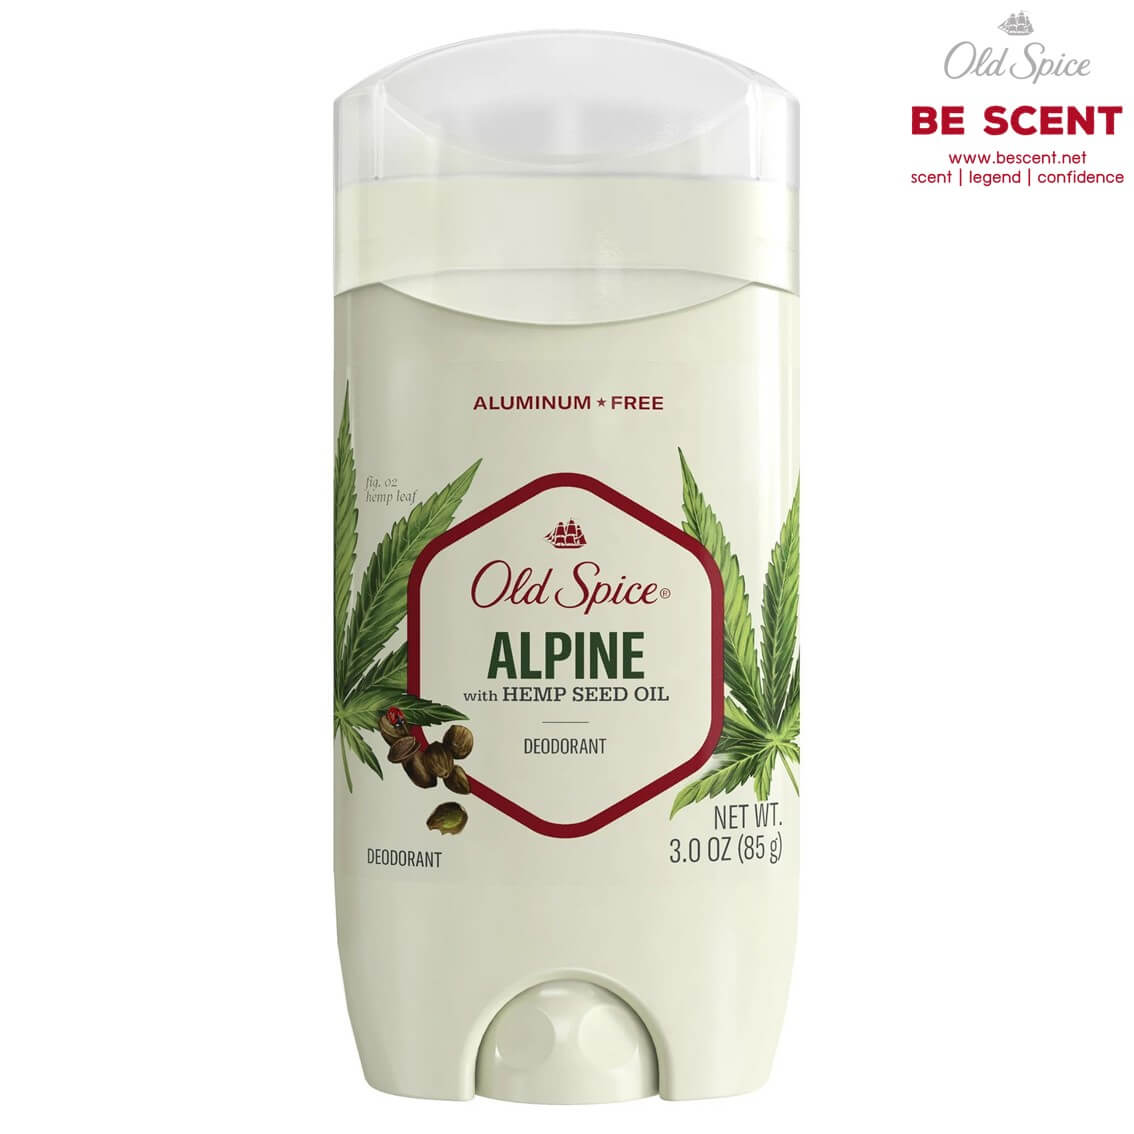 Old Spice กลิ่น Alpine สูตรเหงื่อน้อย แต่เต่าเหม็น โรลออนดับกลิ่นเต่า ขนาด 85 กรัม